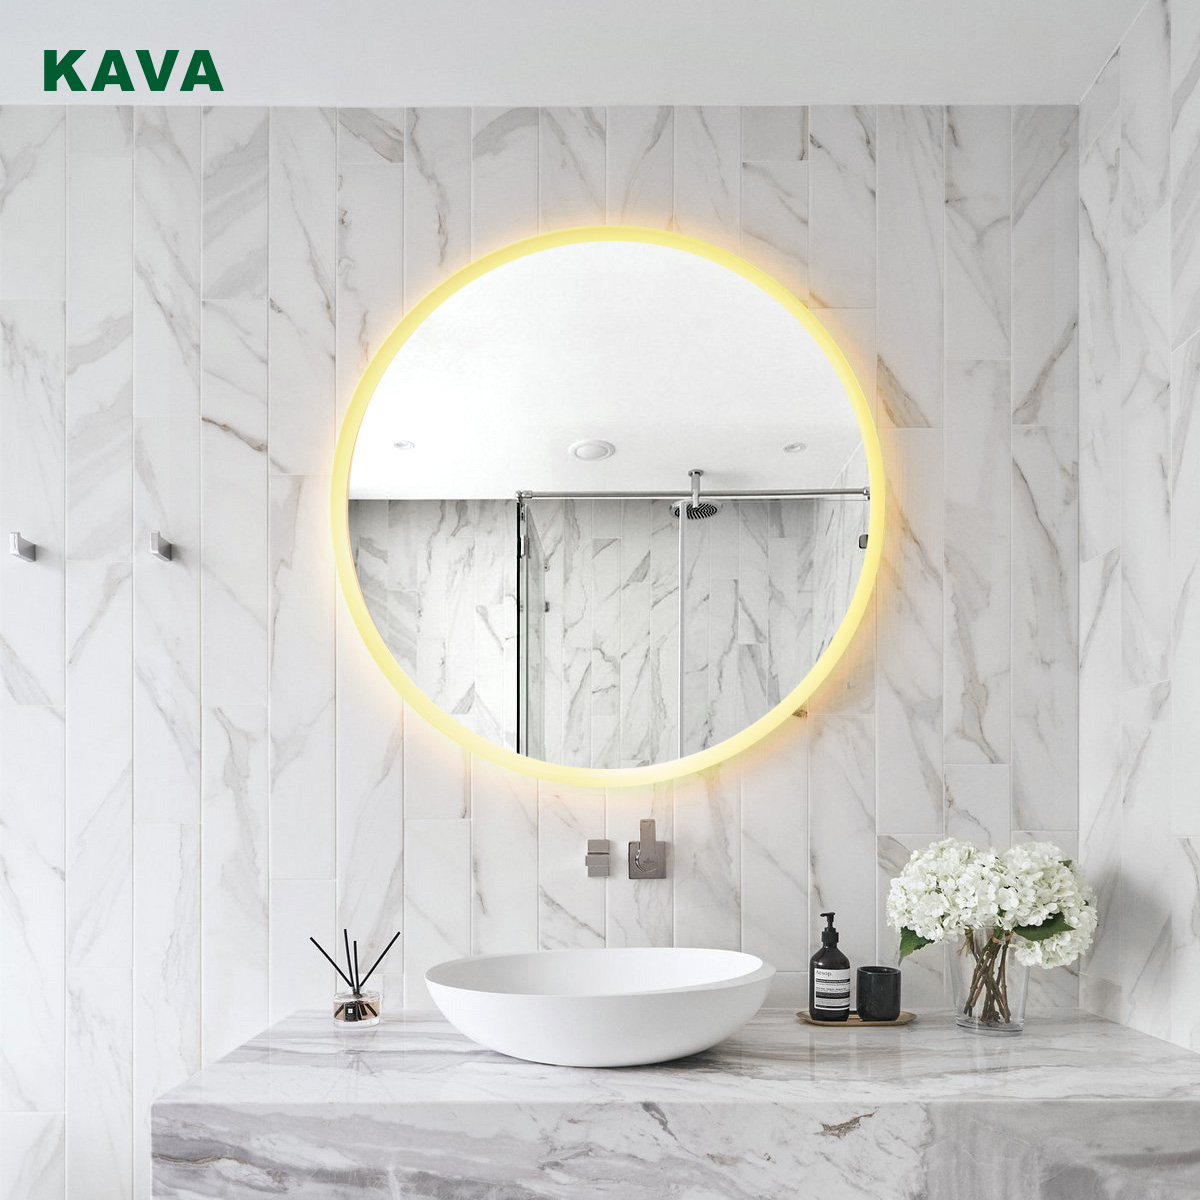 Cheap price Outdoor Wall Mounted Lights - Round mirror light Waterproof Bathroom Led Vanity Lights KMV6008M – KAVA